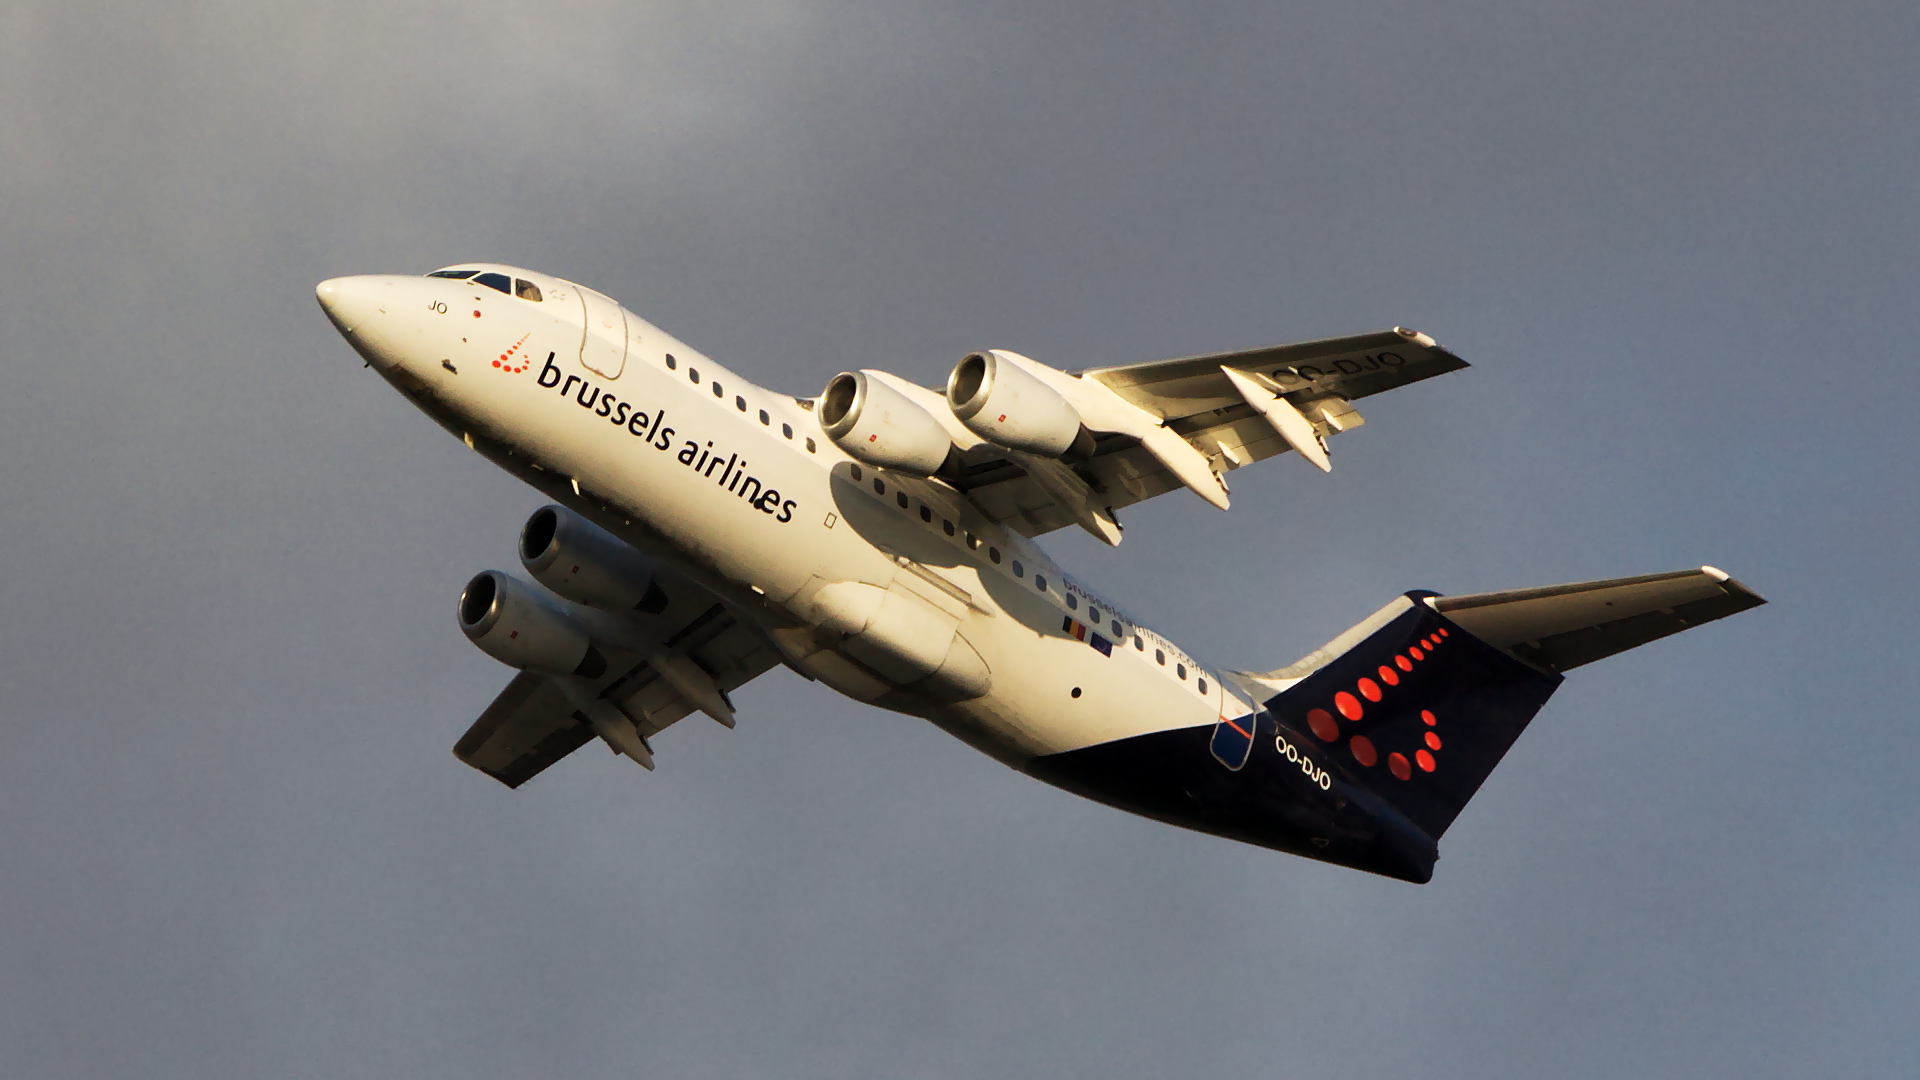 OO-DJO ✈ Brussels Airlines British Aerospace Avro RJ85 @ London-Heathrow